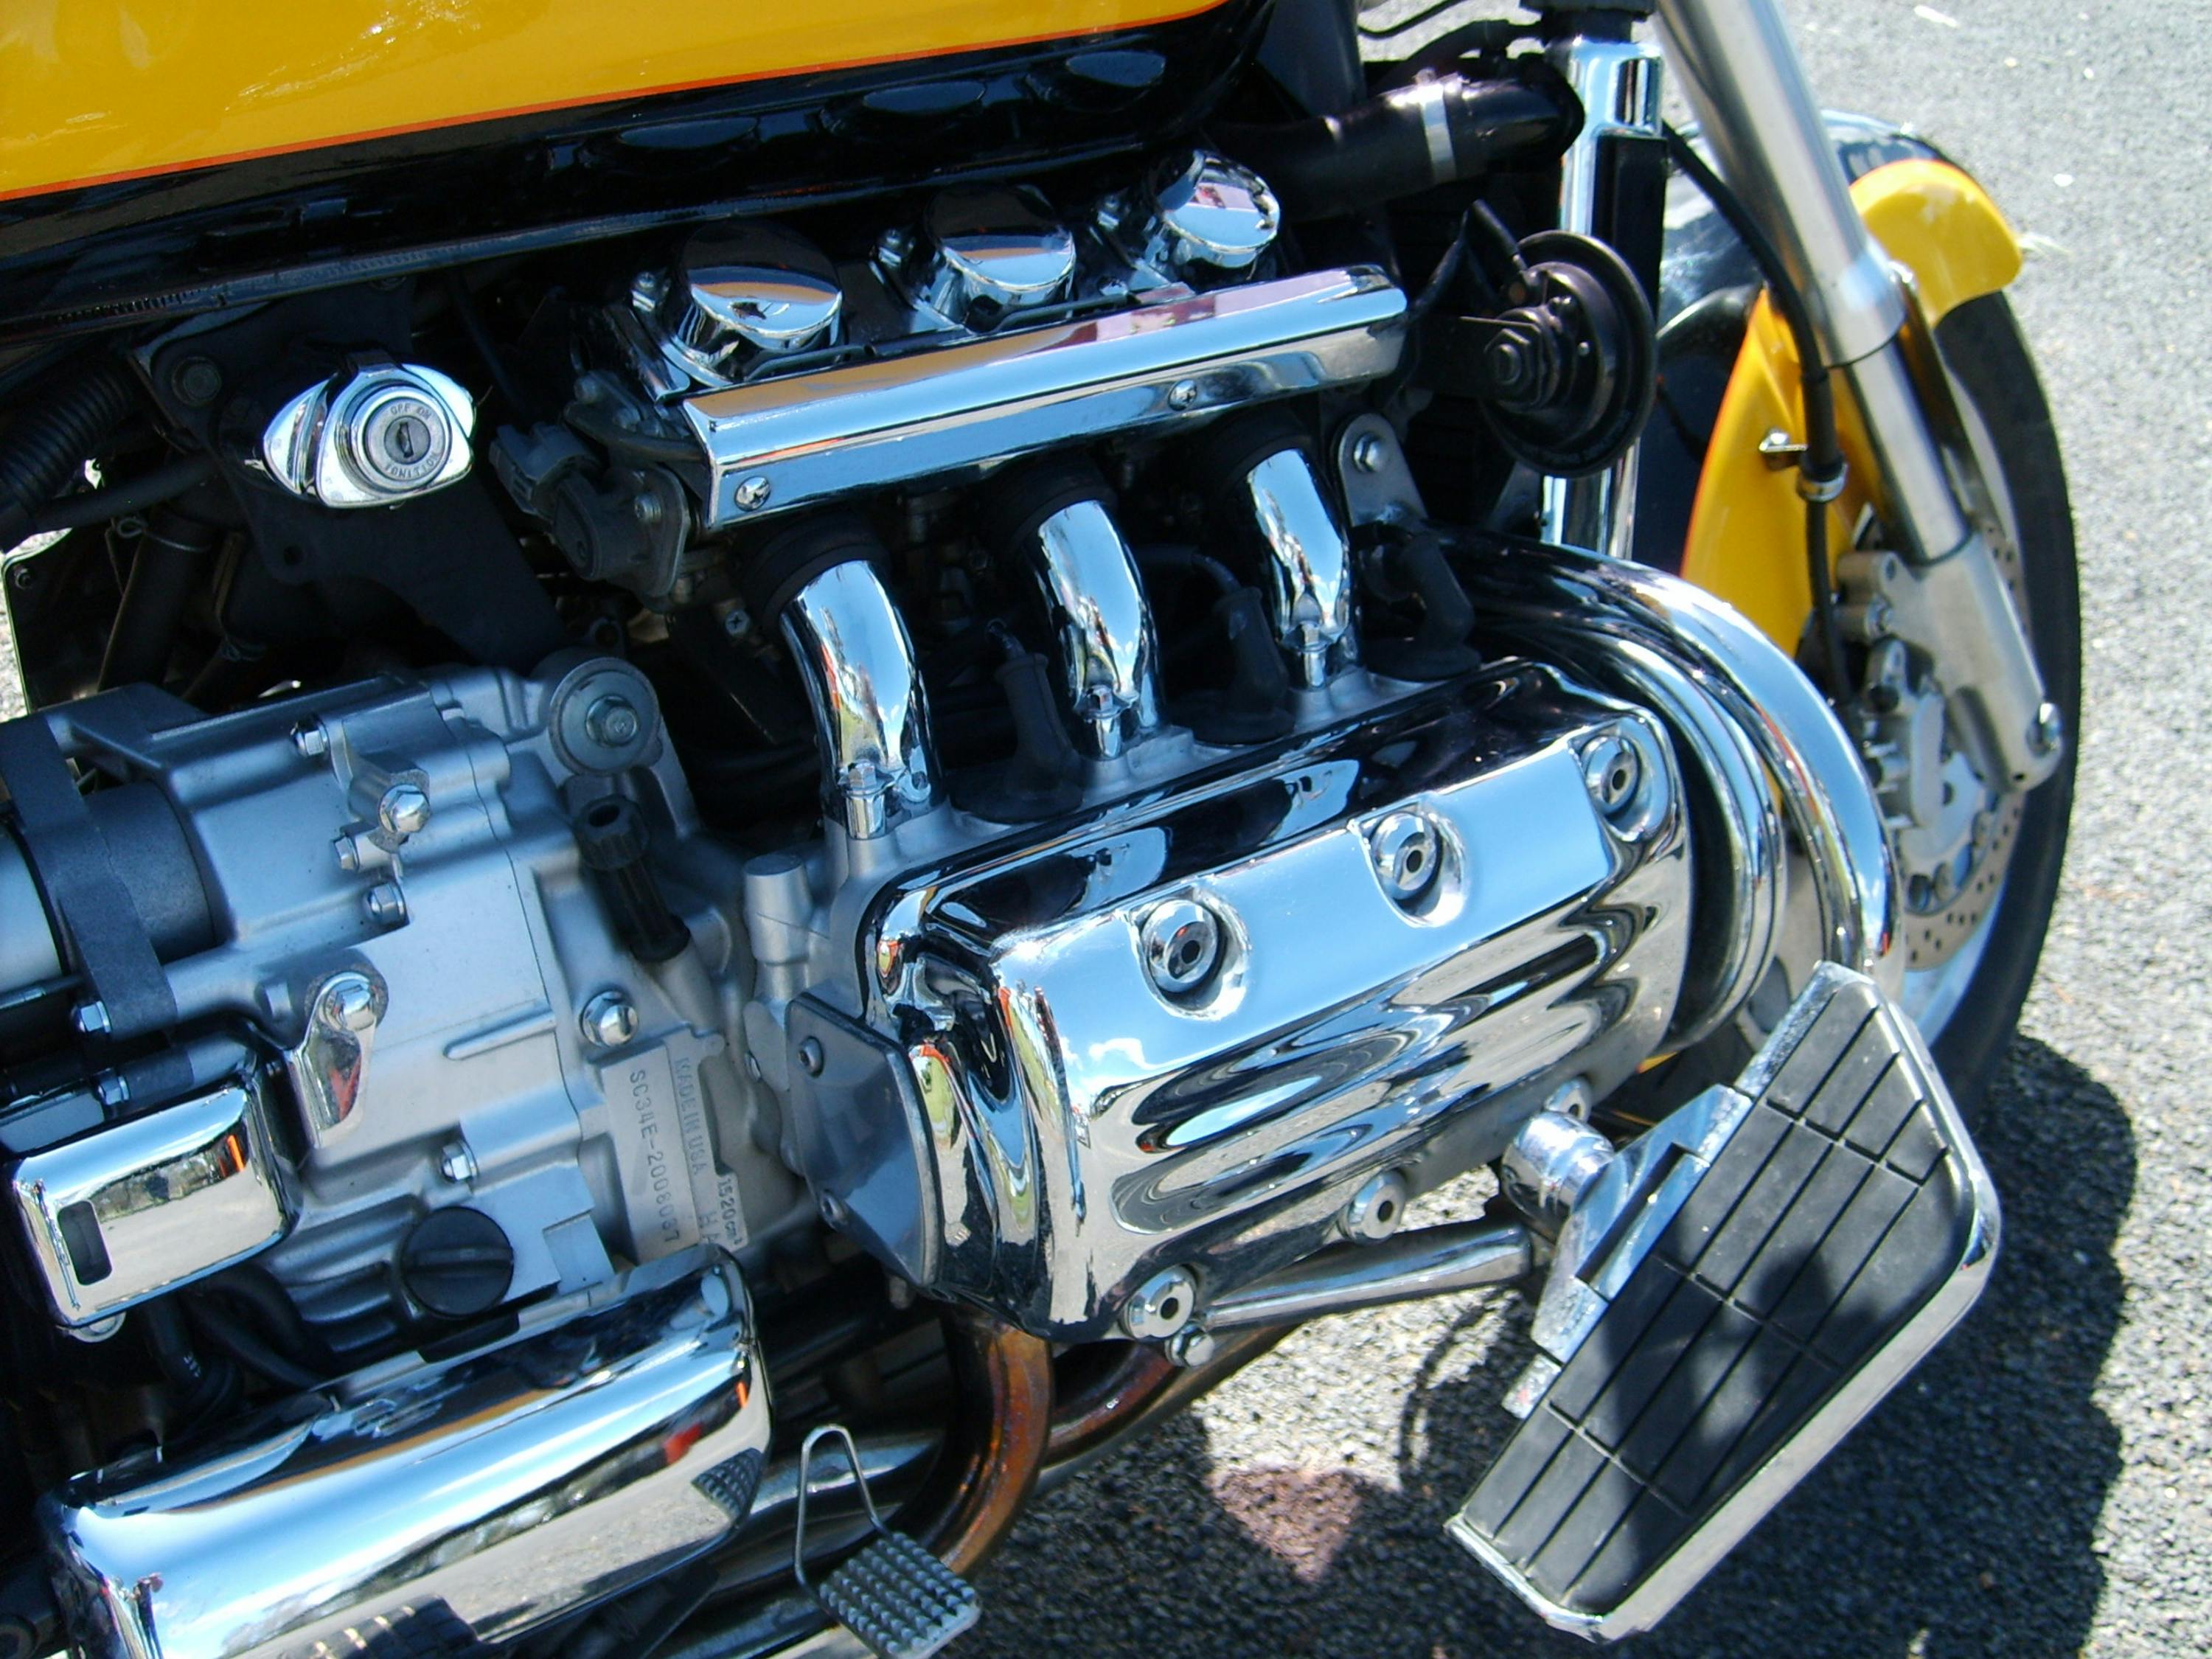 Free stock photo of chrome, motorcycle, motorcycle engine